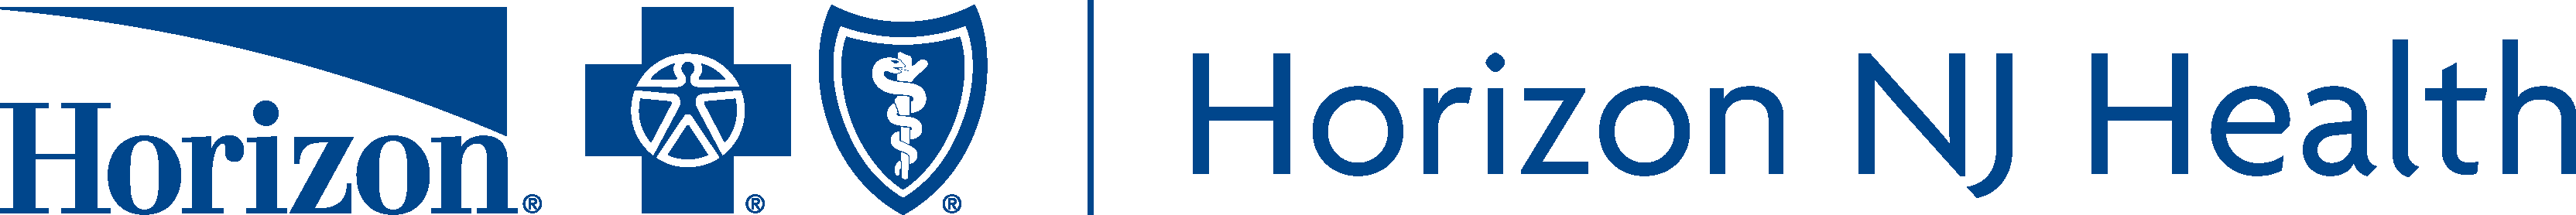 Horizon BCBSNJ NJ Health Logo